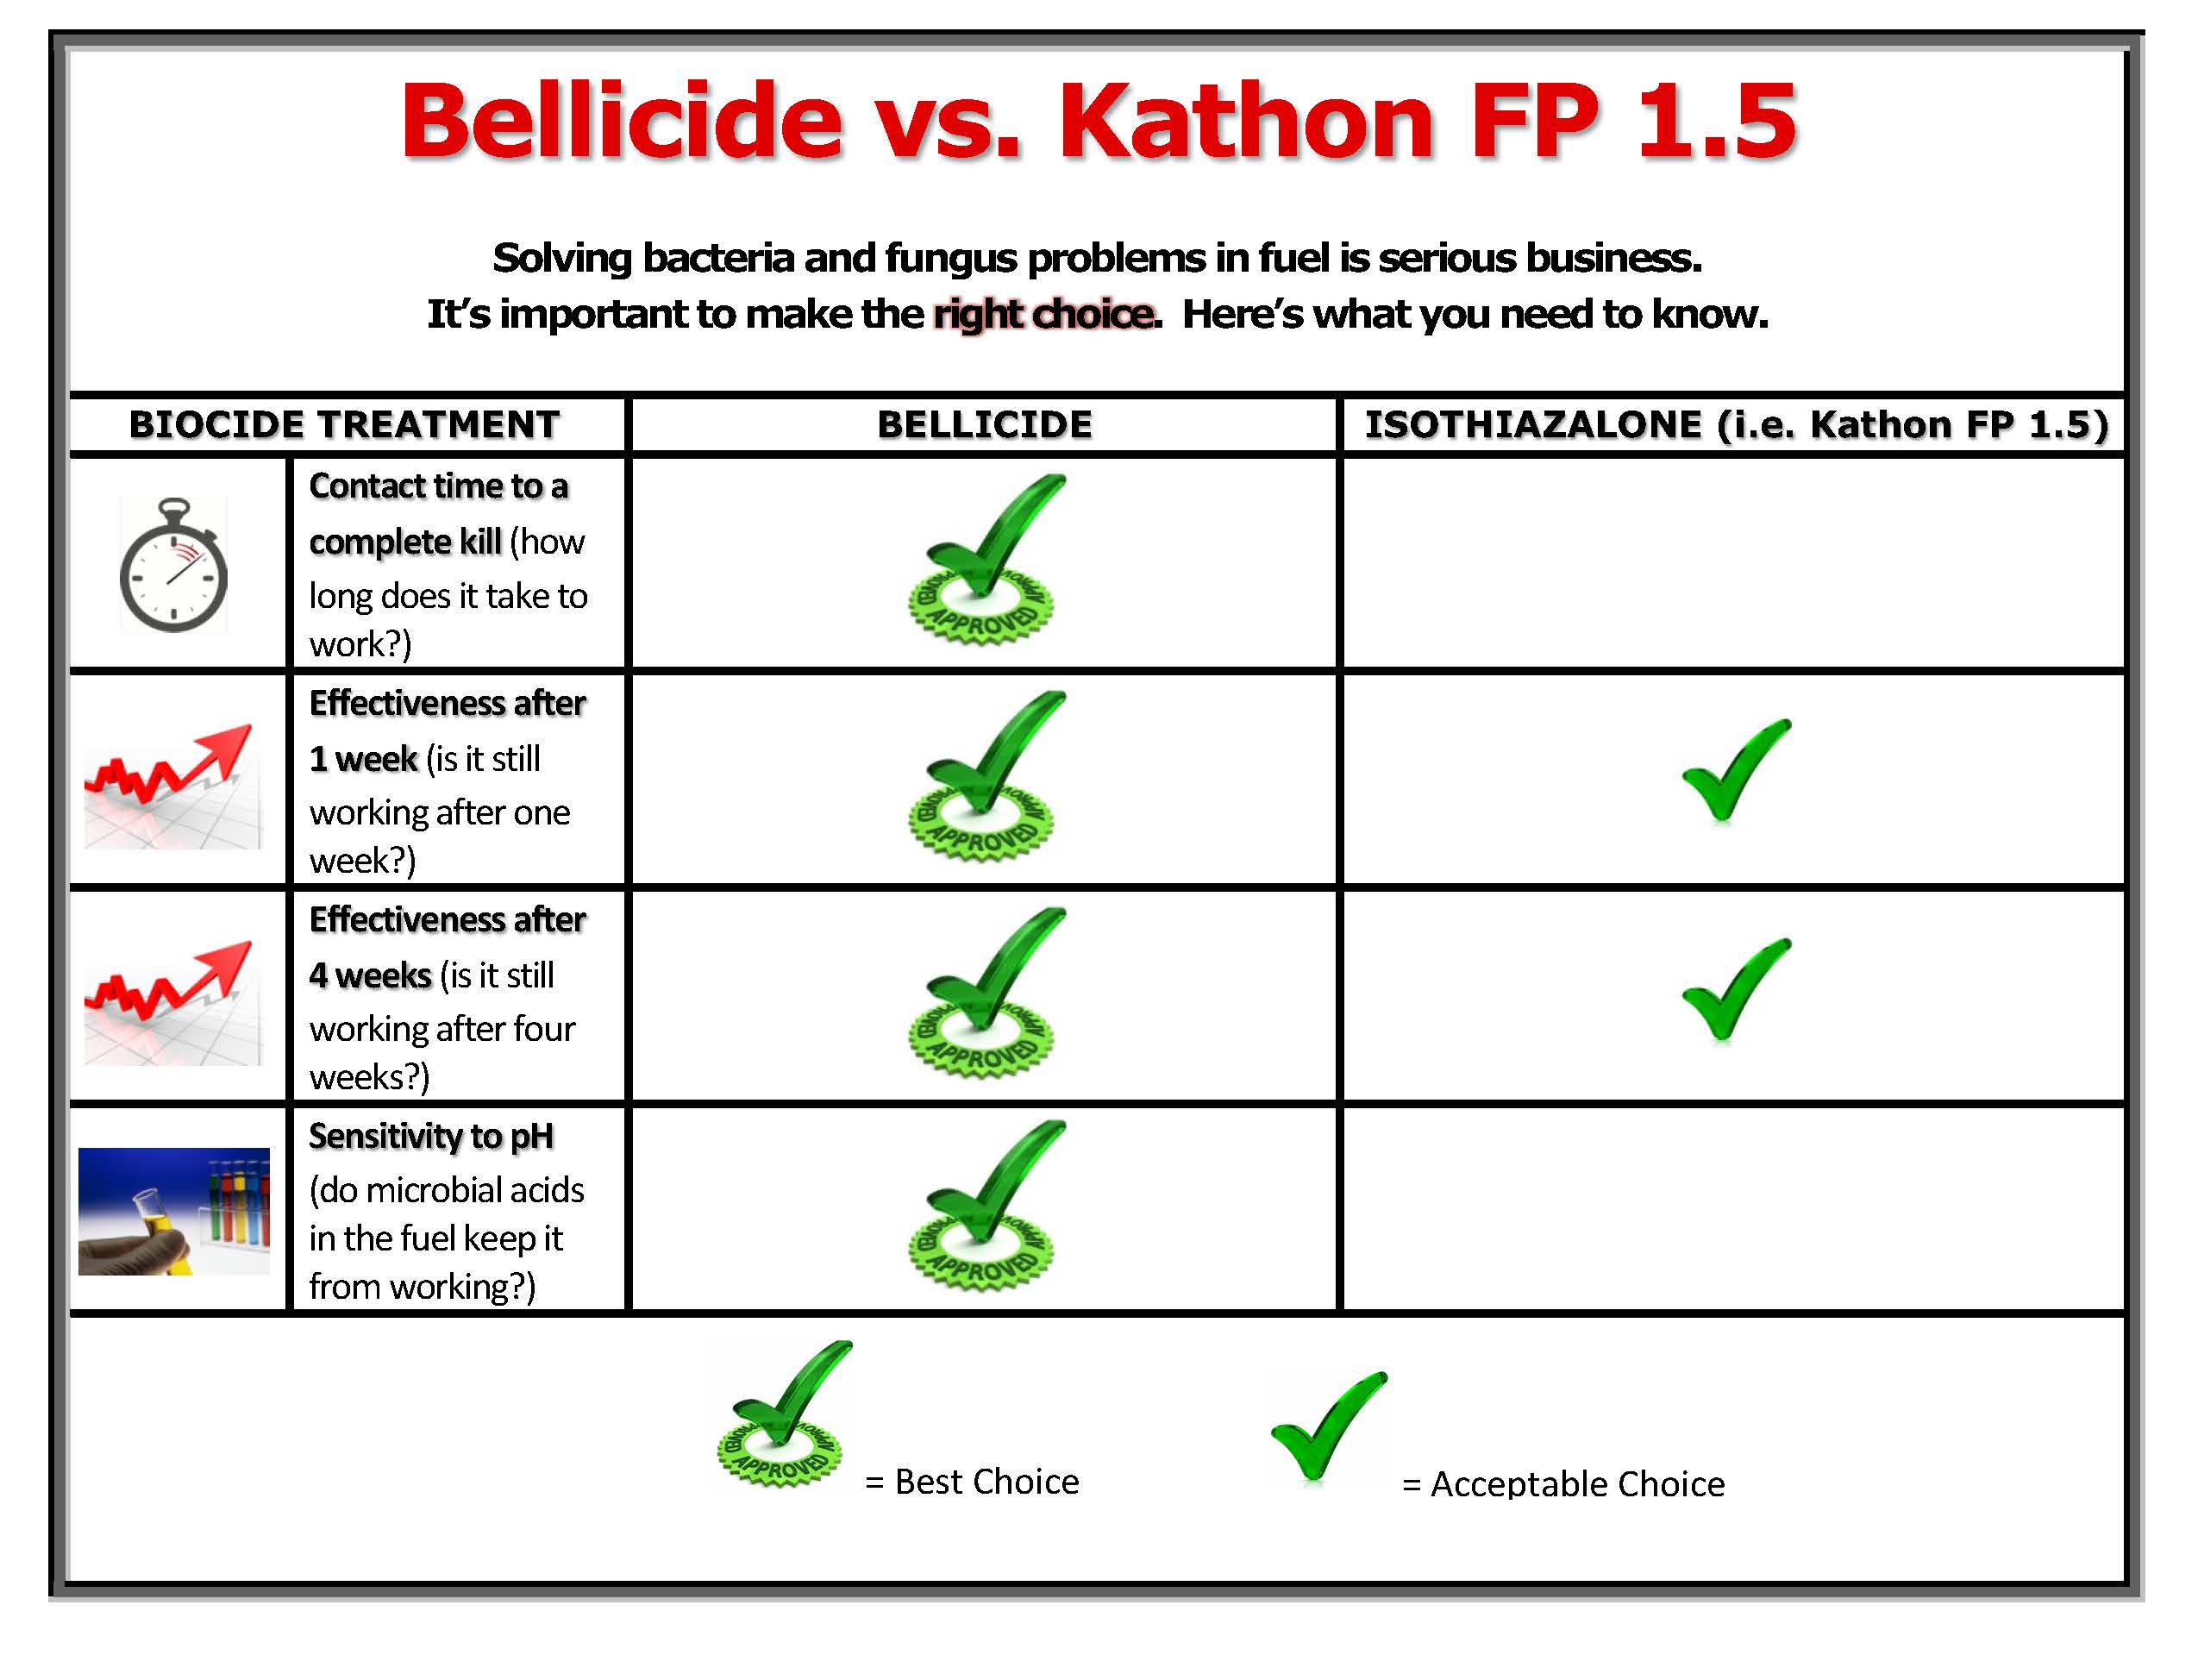 Comparing fuel biocide solutions: Kathon vs. Bellicide